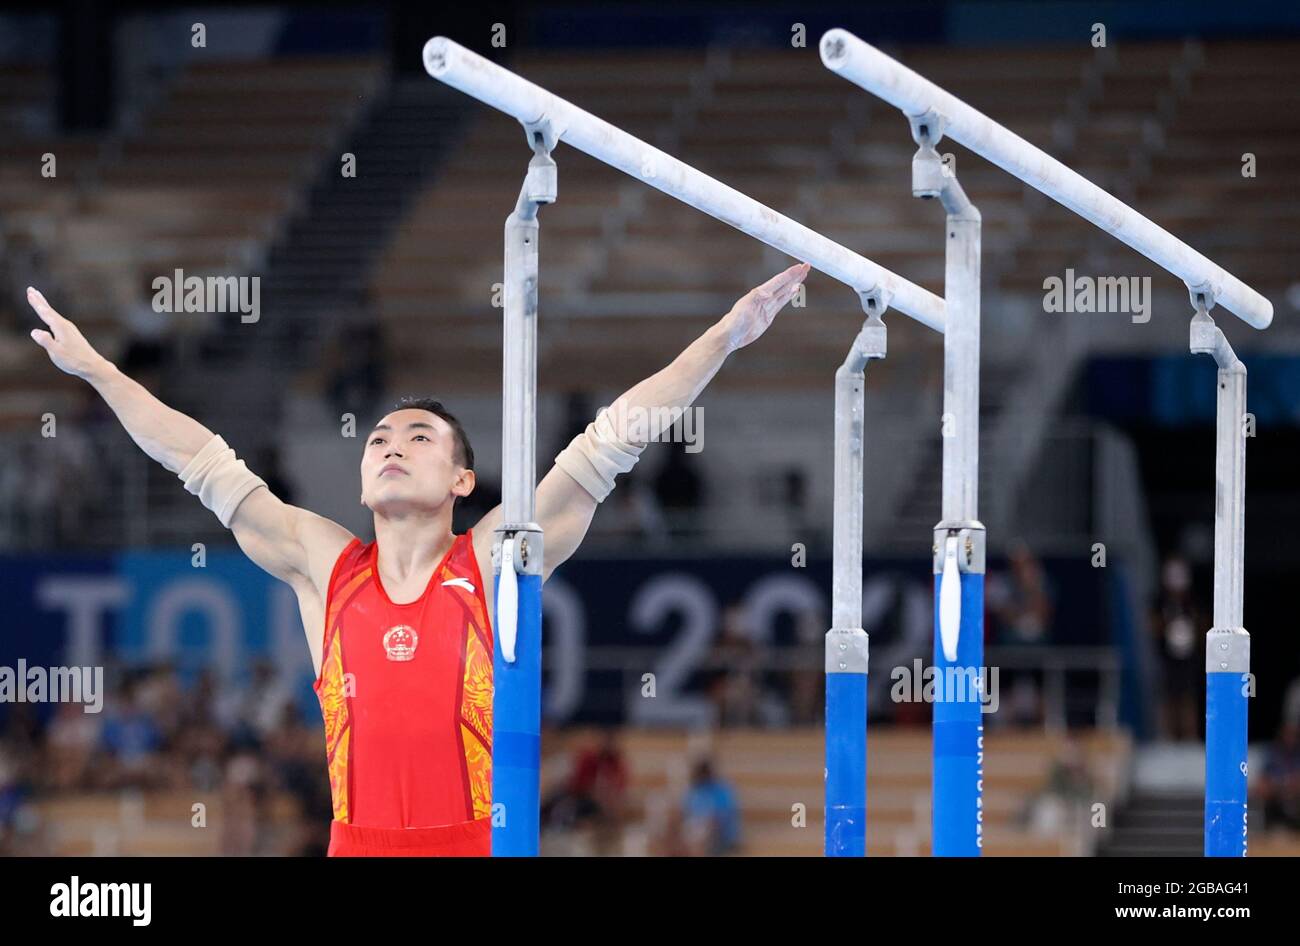 (210803) -- TOKIO, 3. August 2021 (Xinhua) -- Zou Jingyuan aus China reagiert während des Finales der Männer im Kunstturnen-Parallelbarren bei den Olympischen Spielen 2020 in Tokio, Japan, am 3. August 2021. (Xinhua/Zheng Huansong) Stockfoto